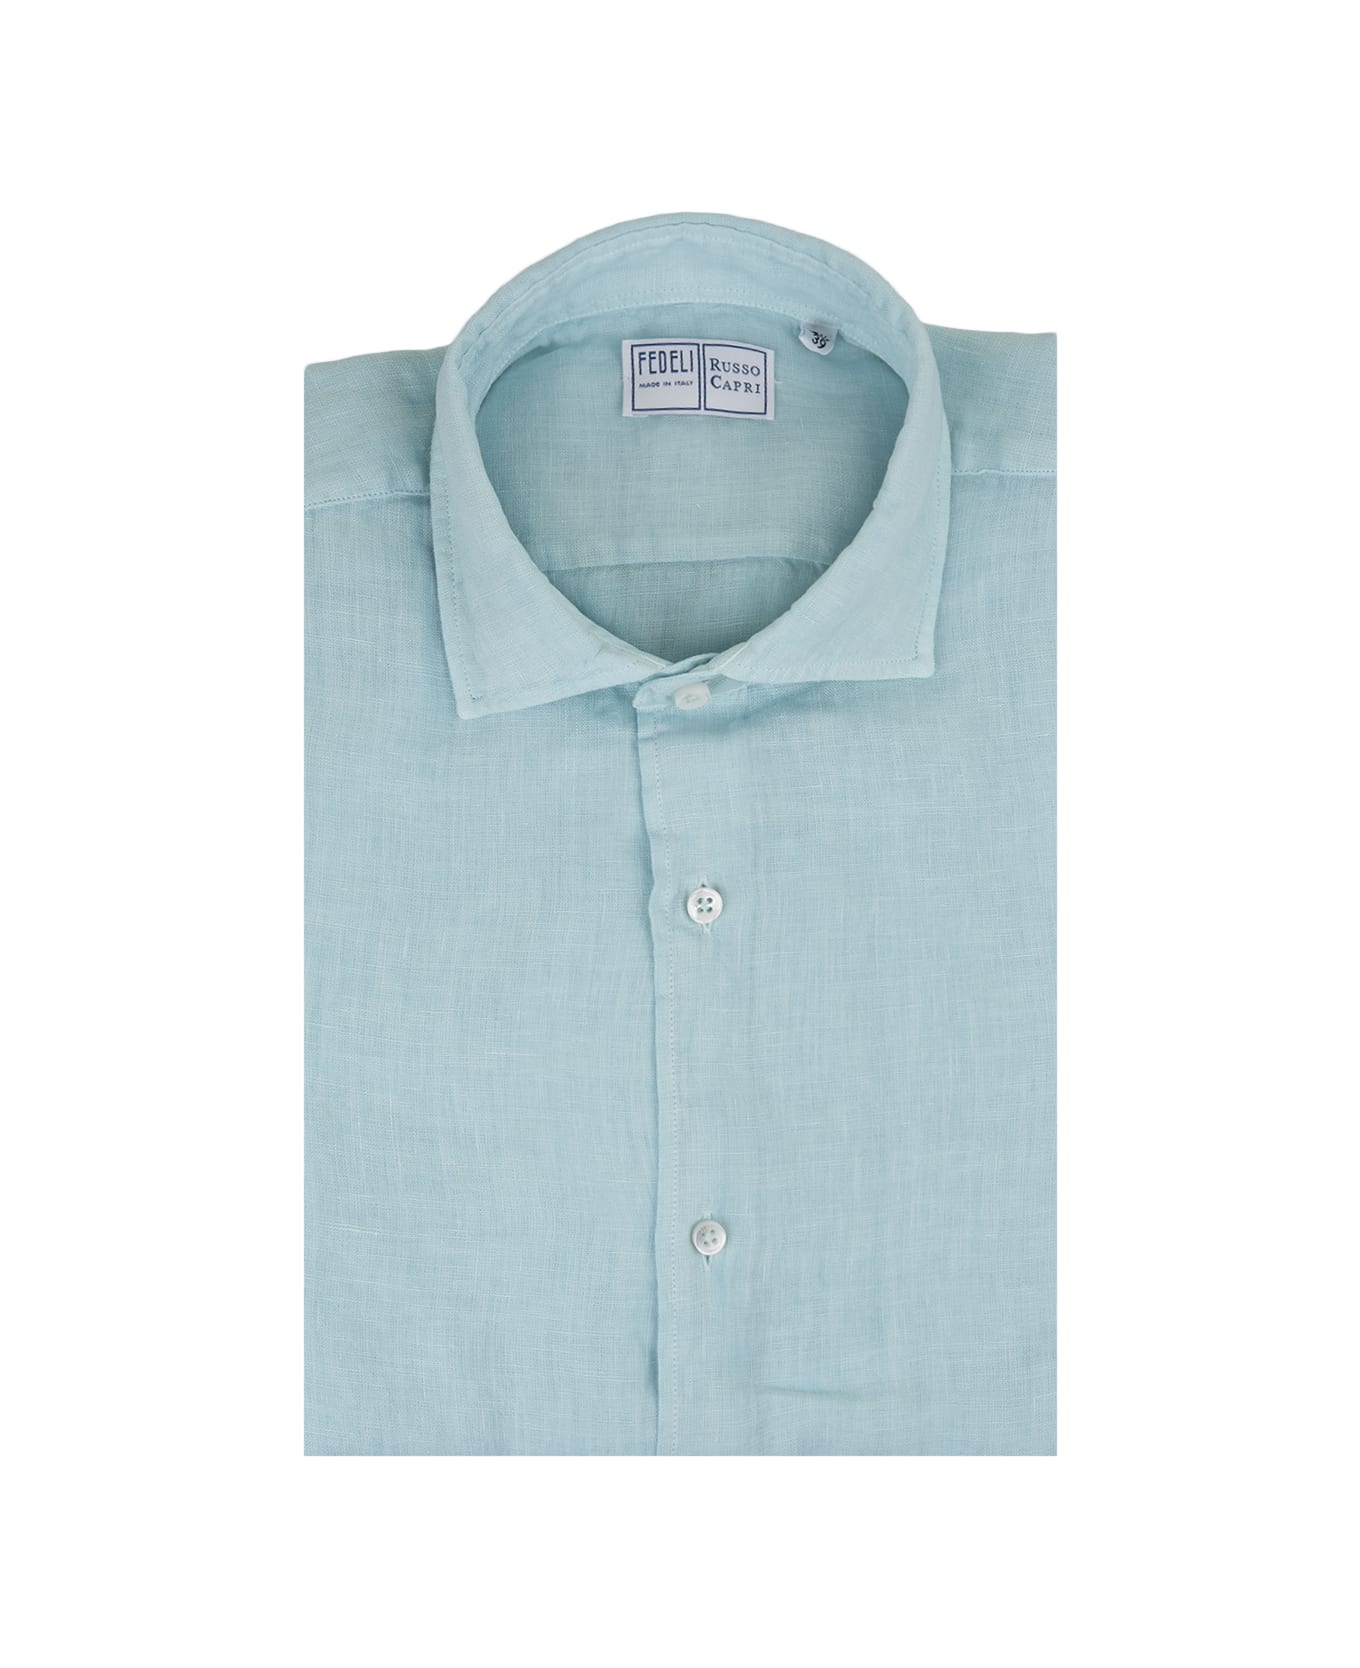 Fedeli Nick Shirt In Aqua Green Linen - Blue